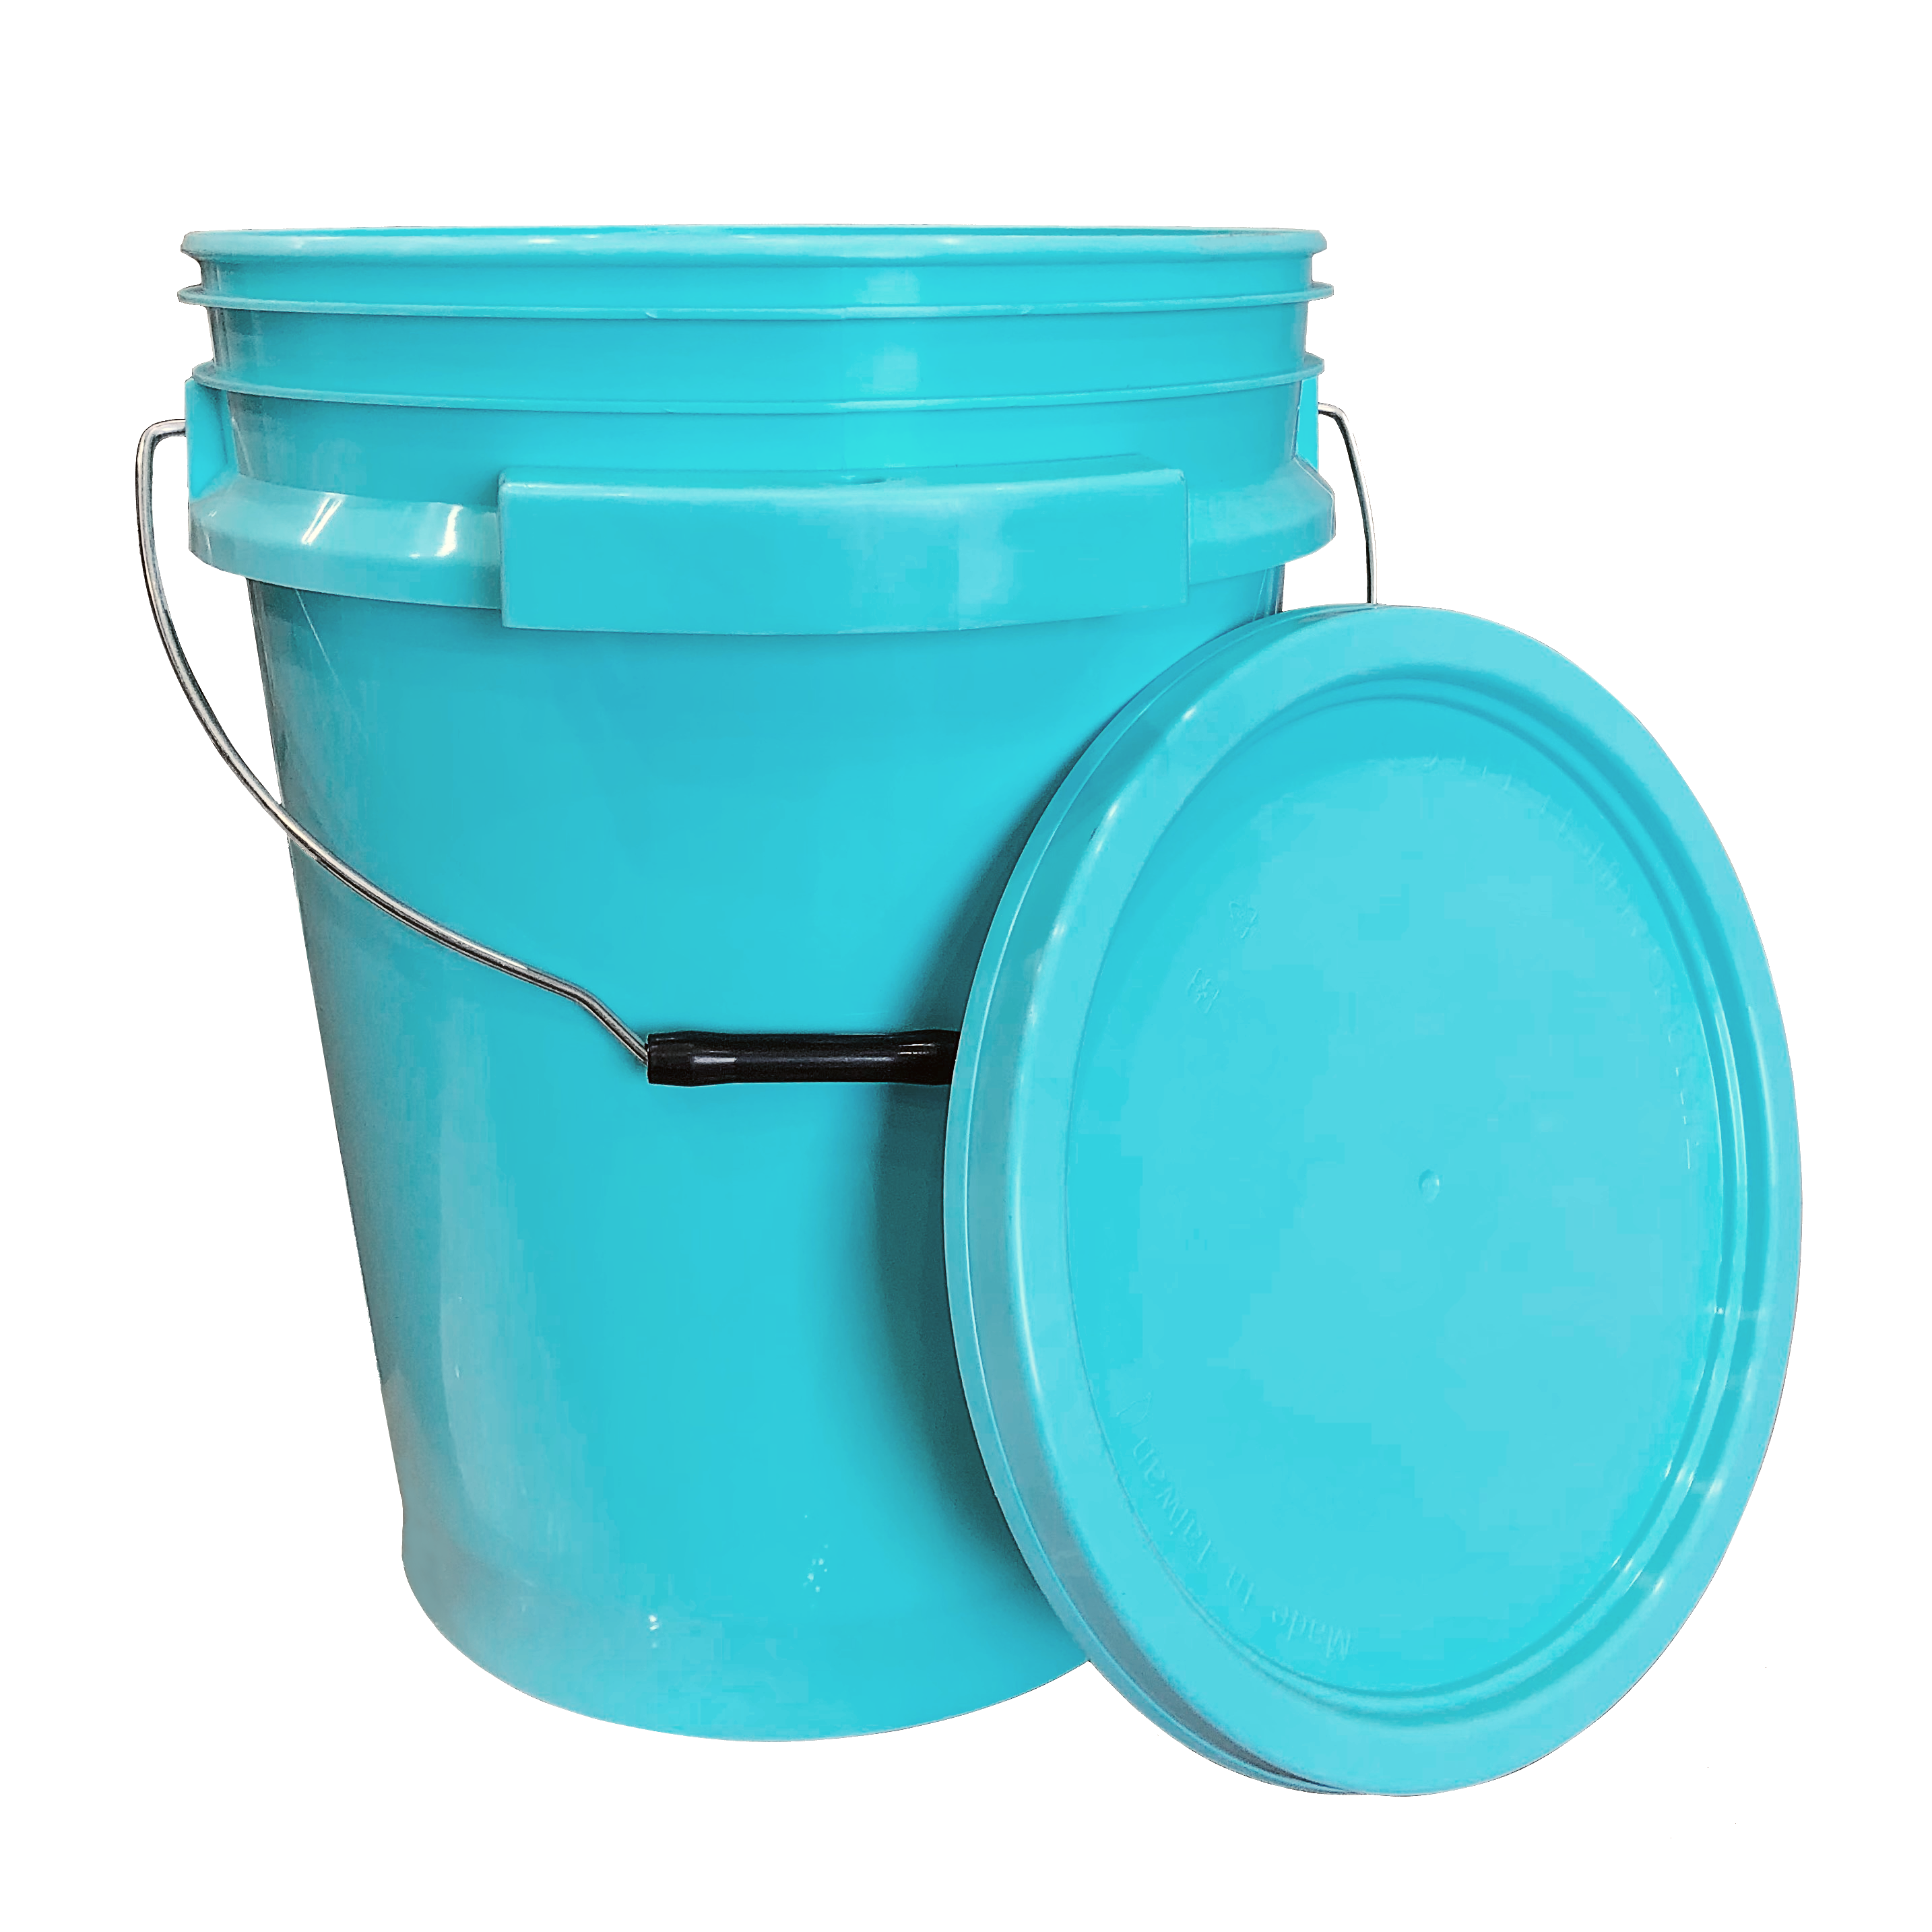 Lee Fisher Sports iSmart Bucket - 5 Gallon Metal Handle Bucket with Lid, Aqua Blue Color - 1 Pack